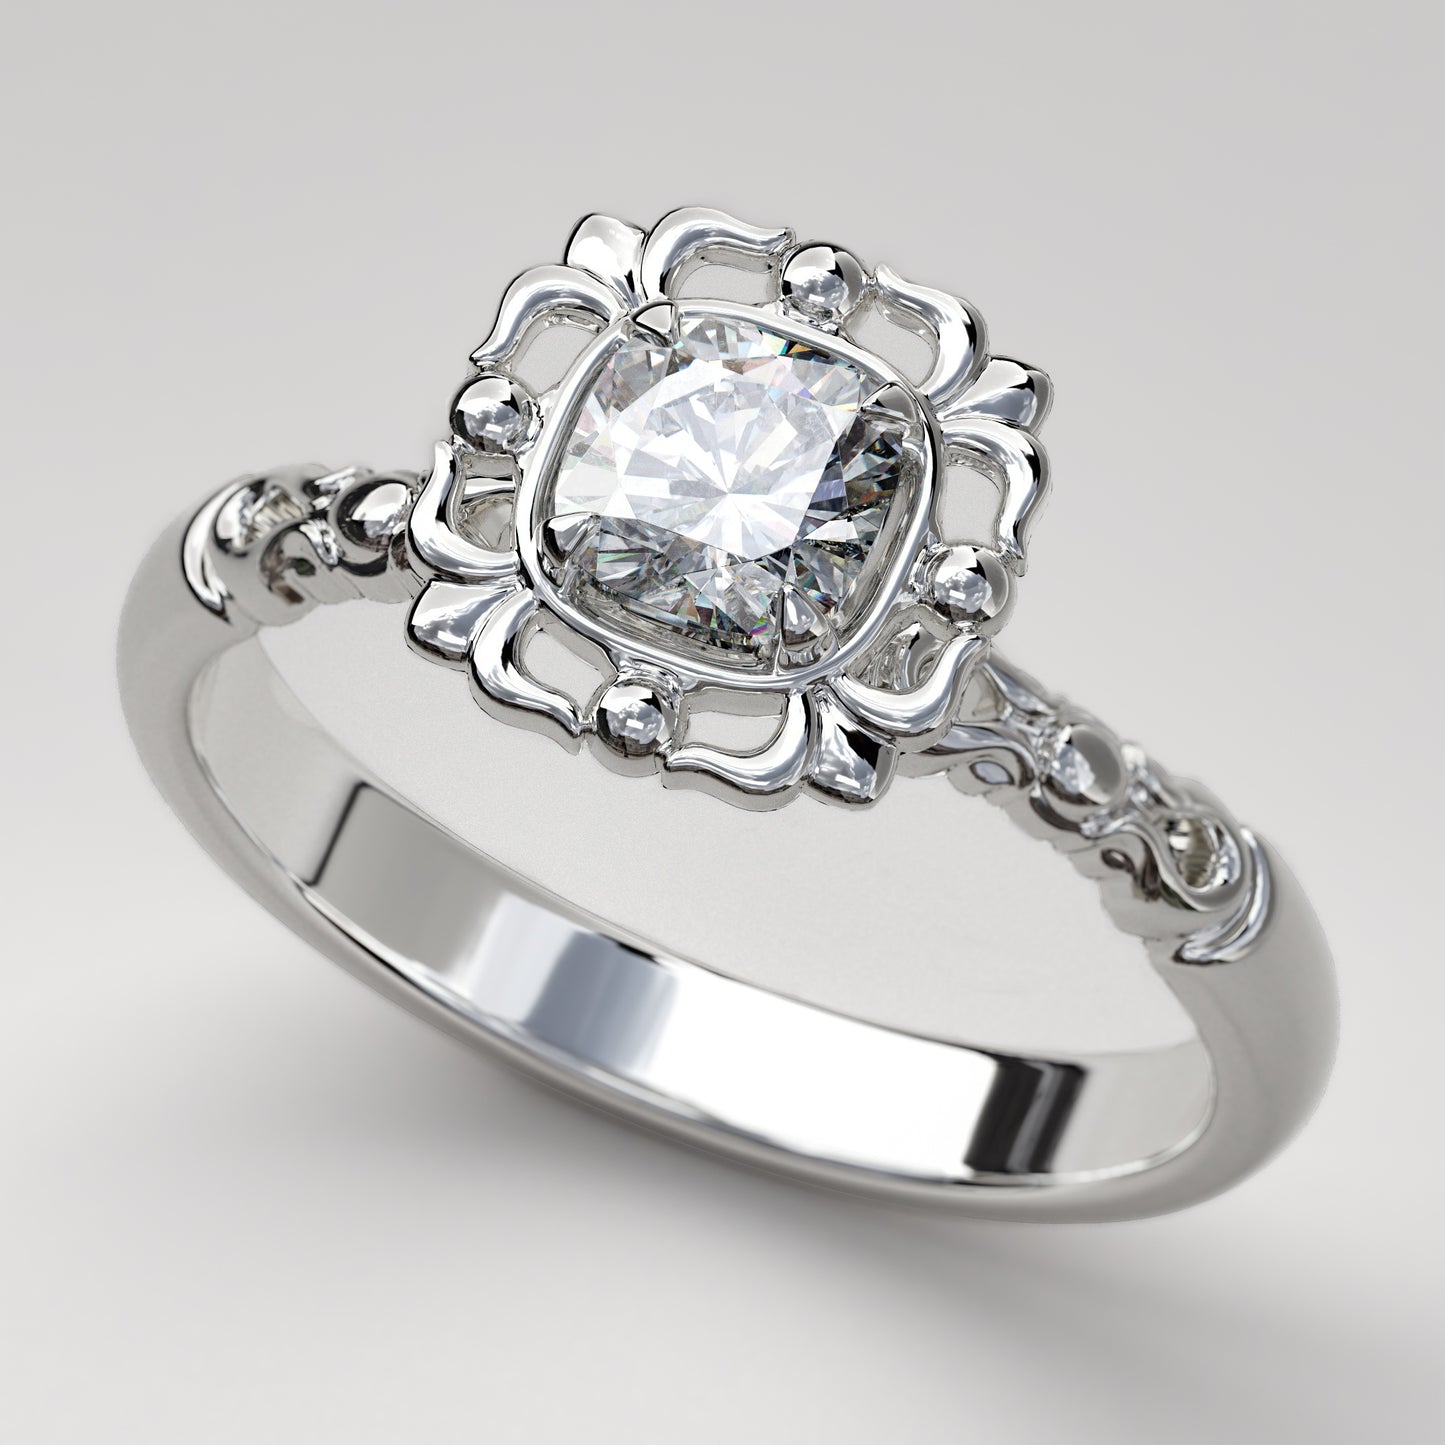 Filigree halo engagement ring with cushion cut Neo Prime Moissanite Gemstone